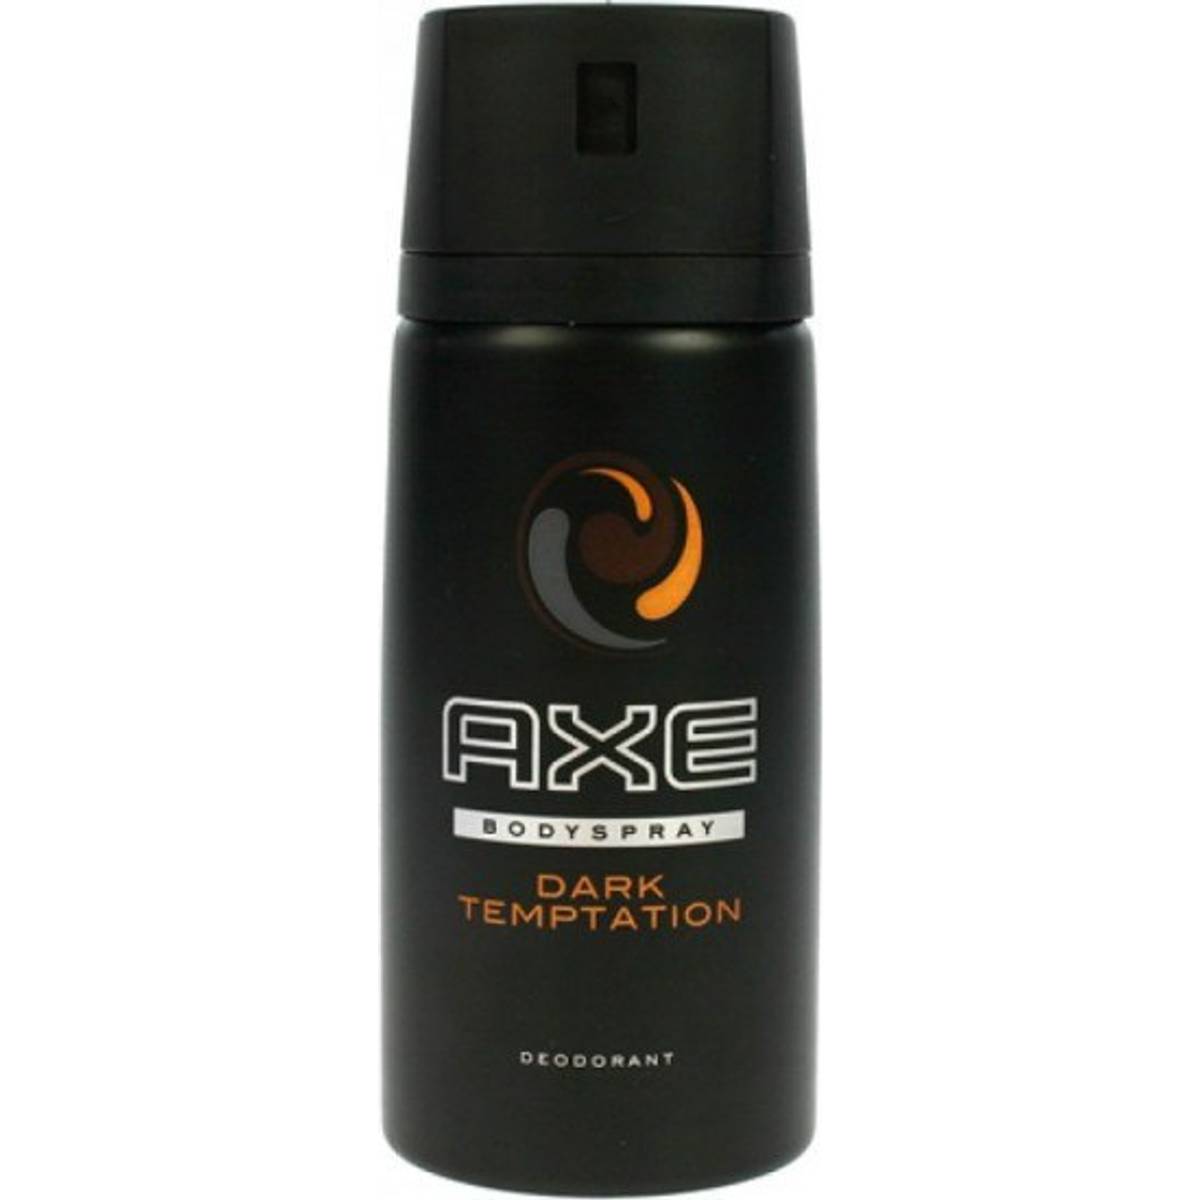 Axe Deodorant (100+ produkter) hos PriceRunner • Se billigste pris ...